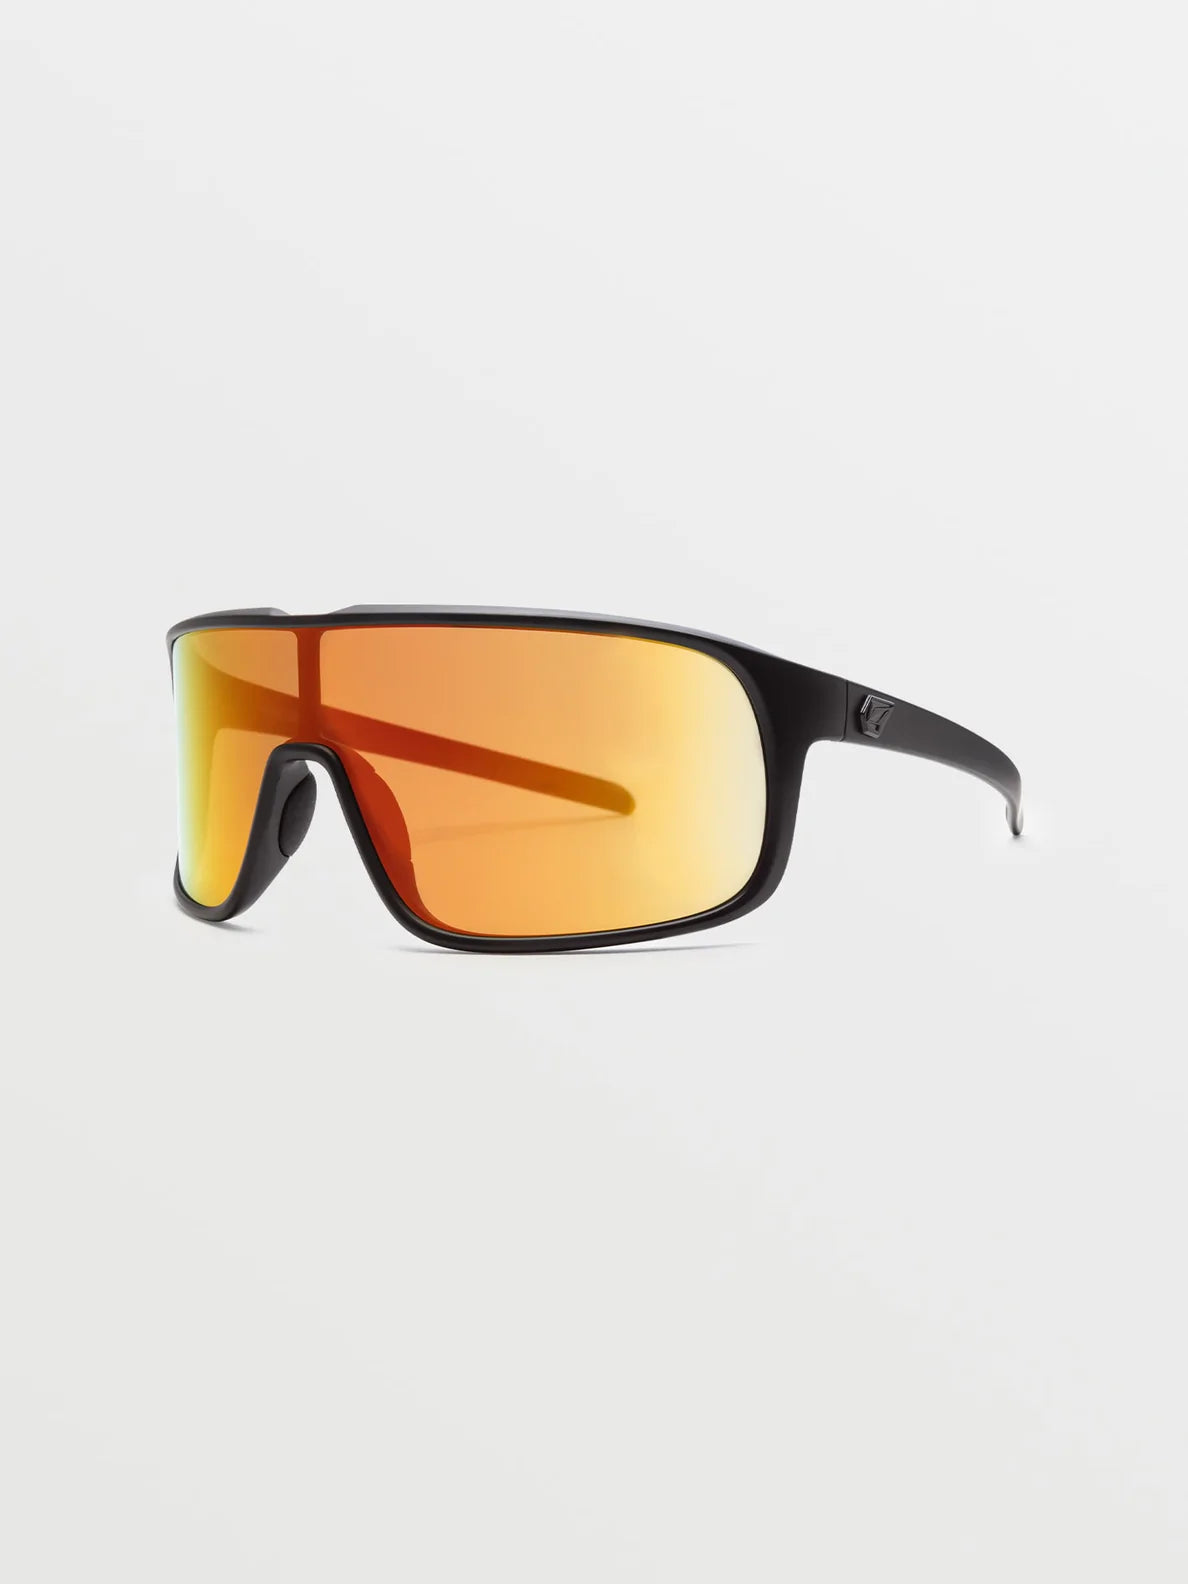 Volcom Macho Sunglasses - AST Colors Sunglasses Matte Black Grey Red Chrome Mirror